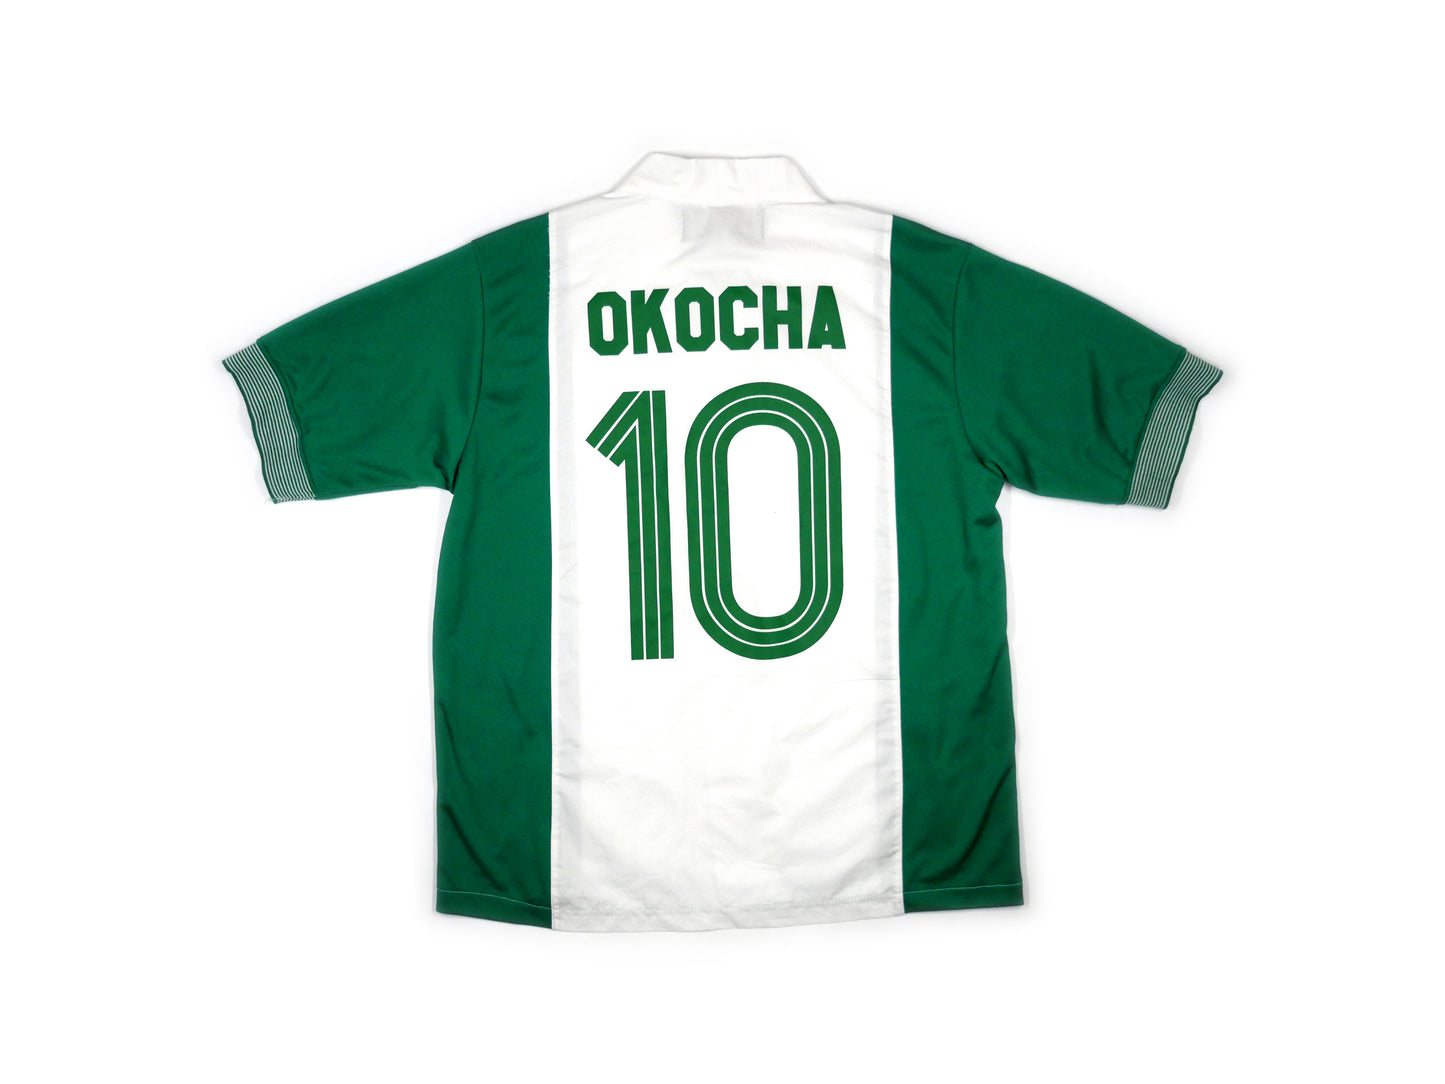 Kasi Flavour Okocha Shirt - Green/White